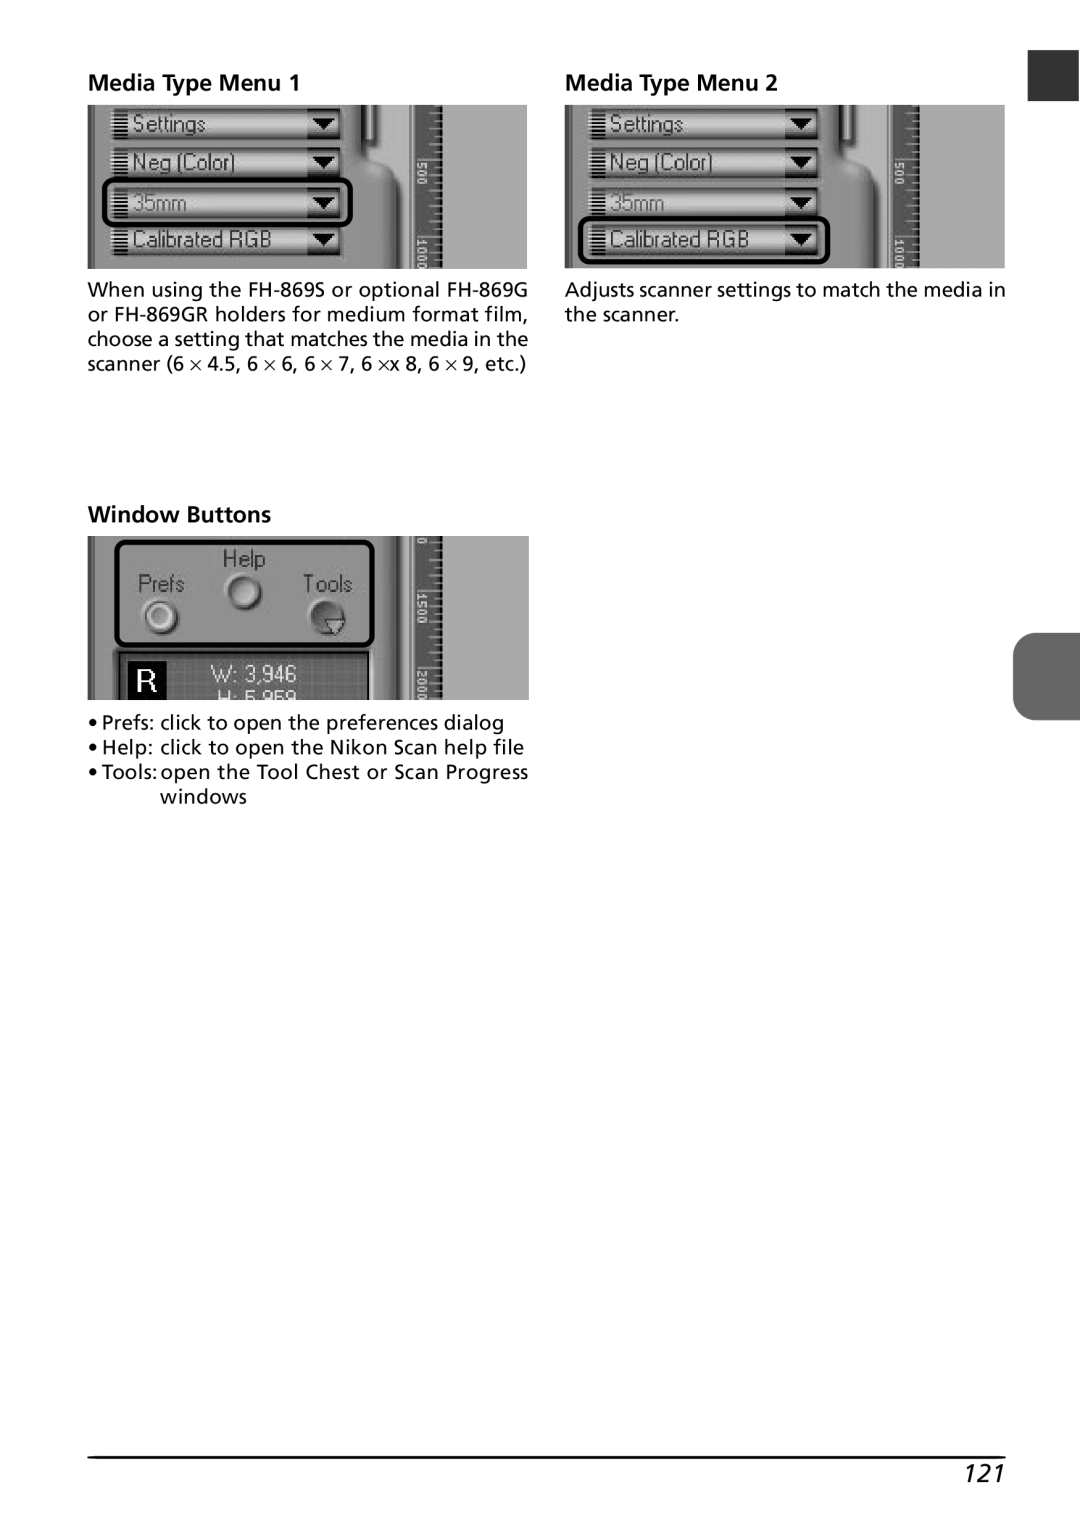 Nikon LS8000 user manual Media Type Menu, Window Buttons, •Prefs: click to open the preferences dialog 